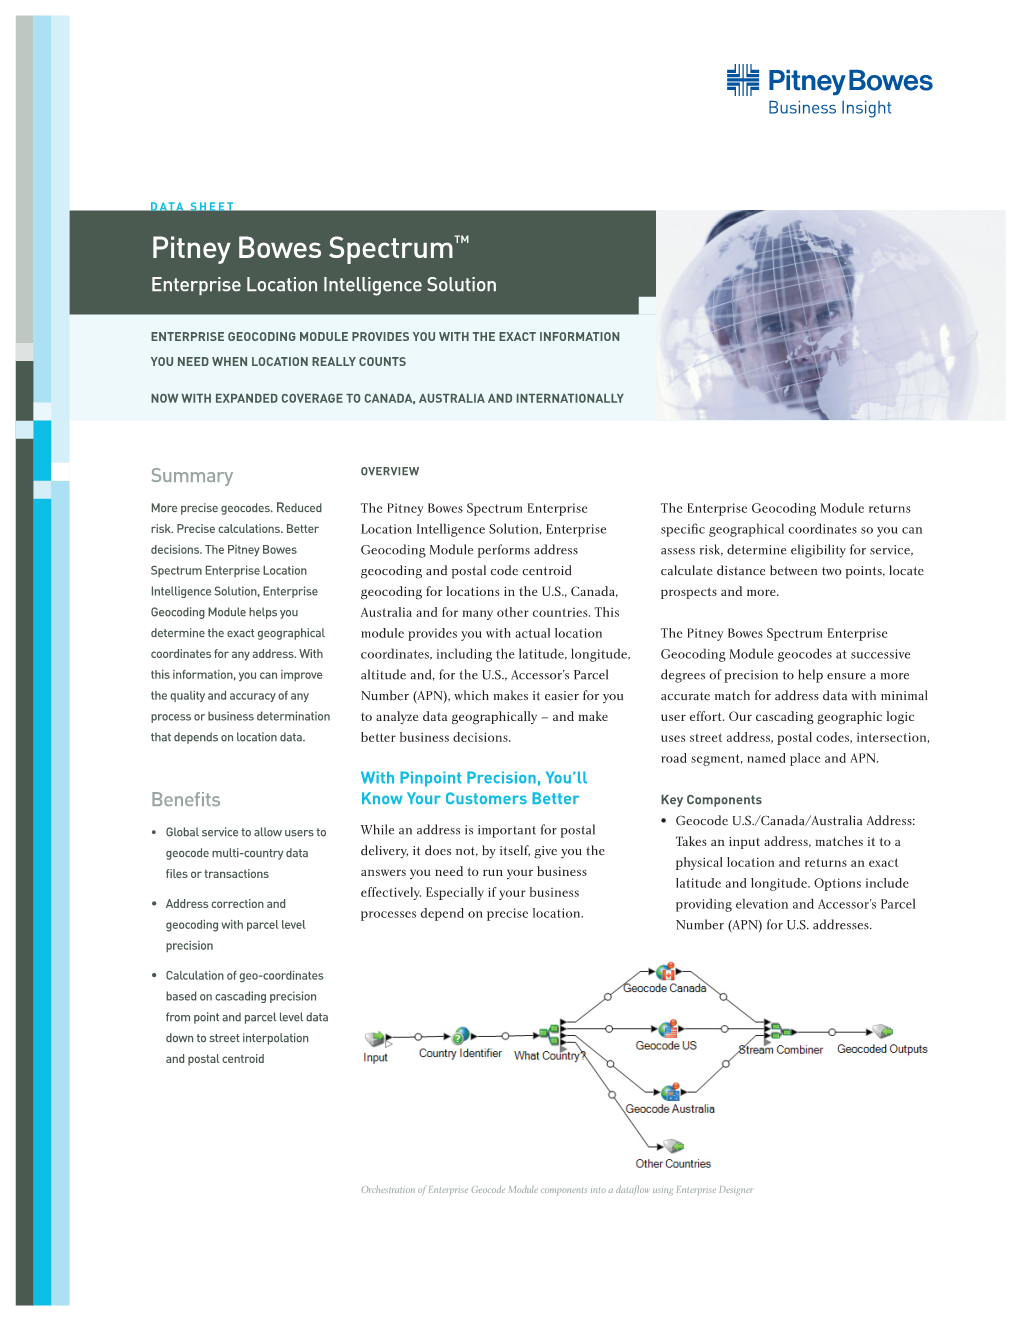 Pitney Bowes Spectrum™ Enterprise Location Intelligence Solution